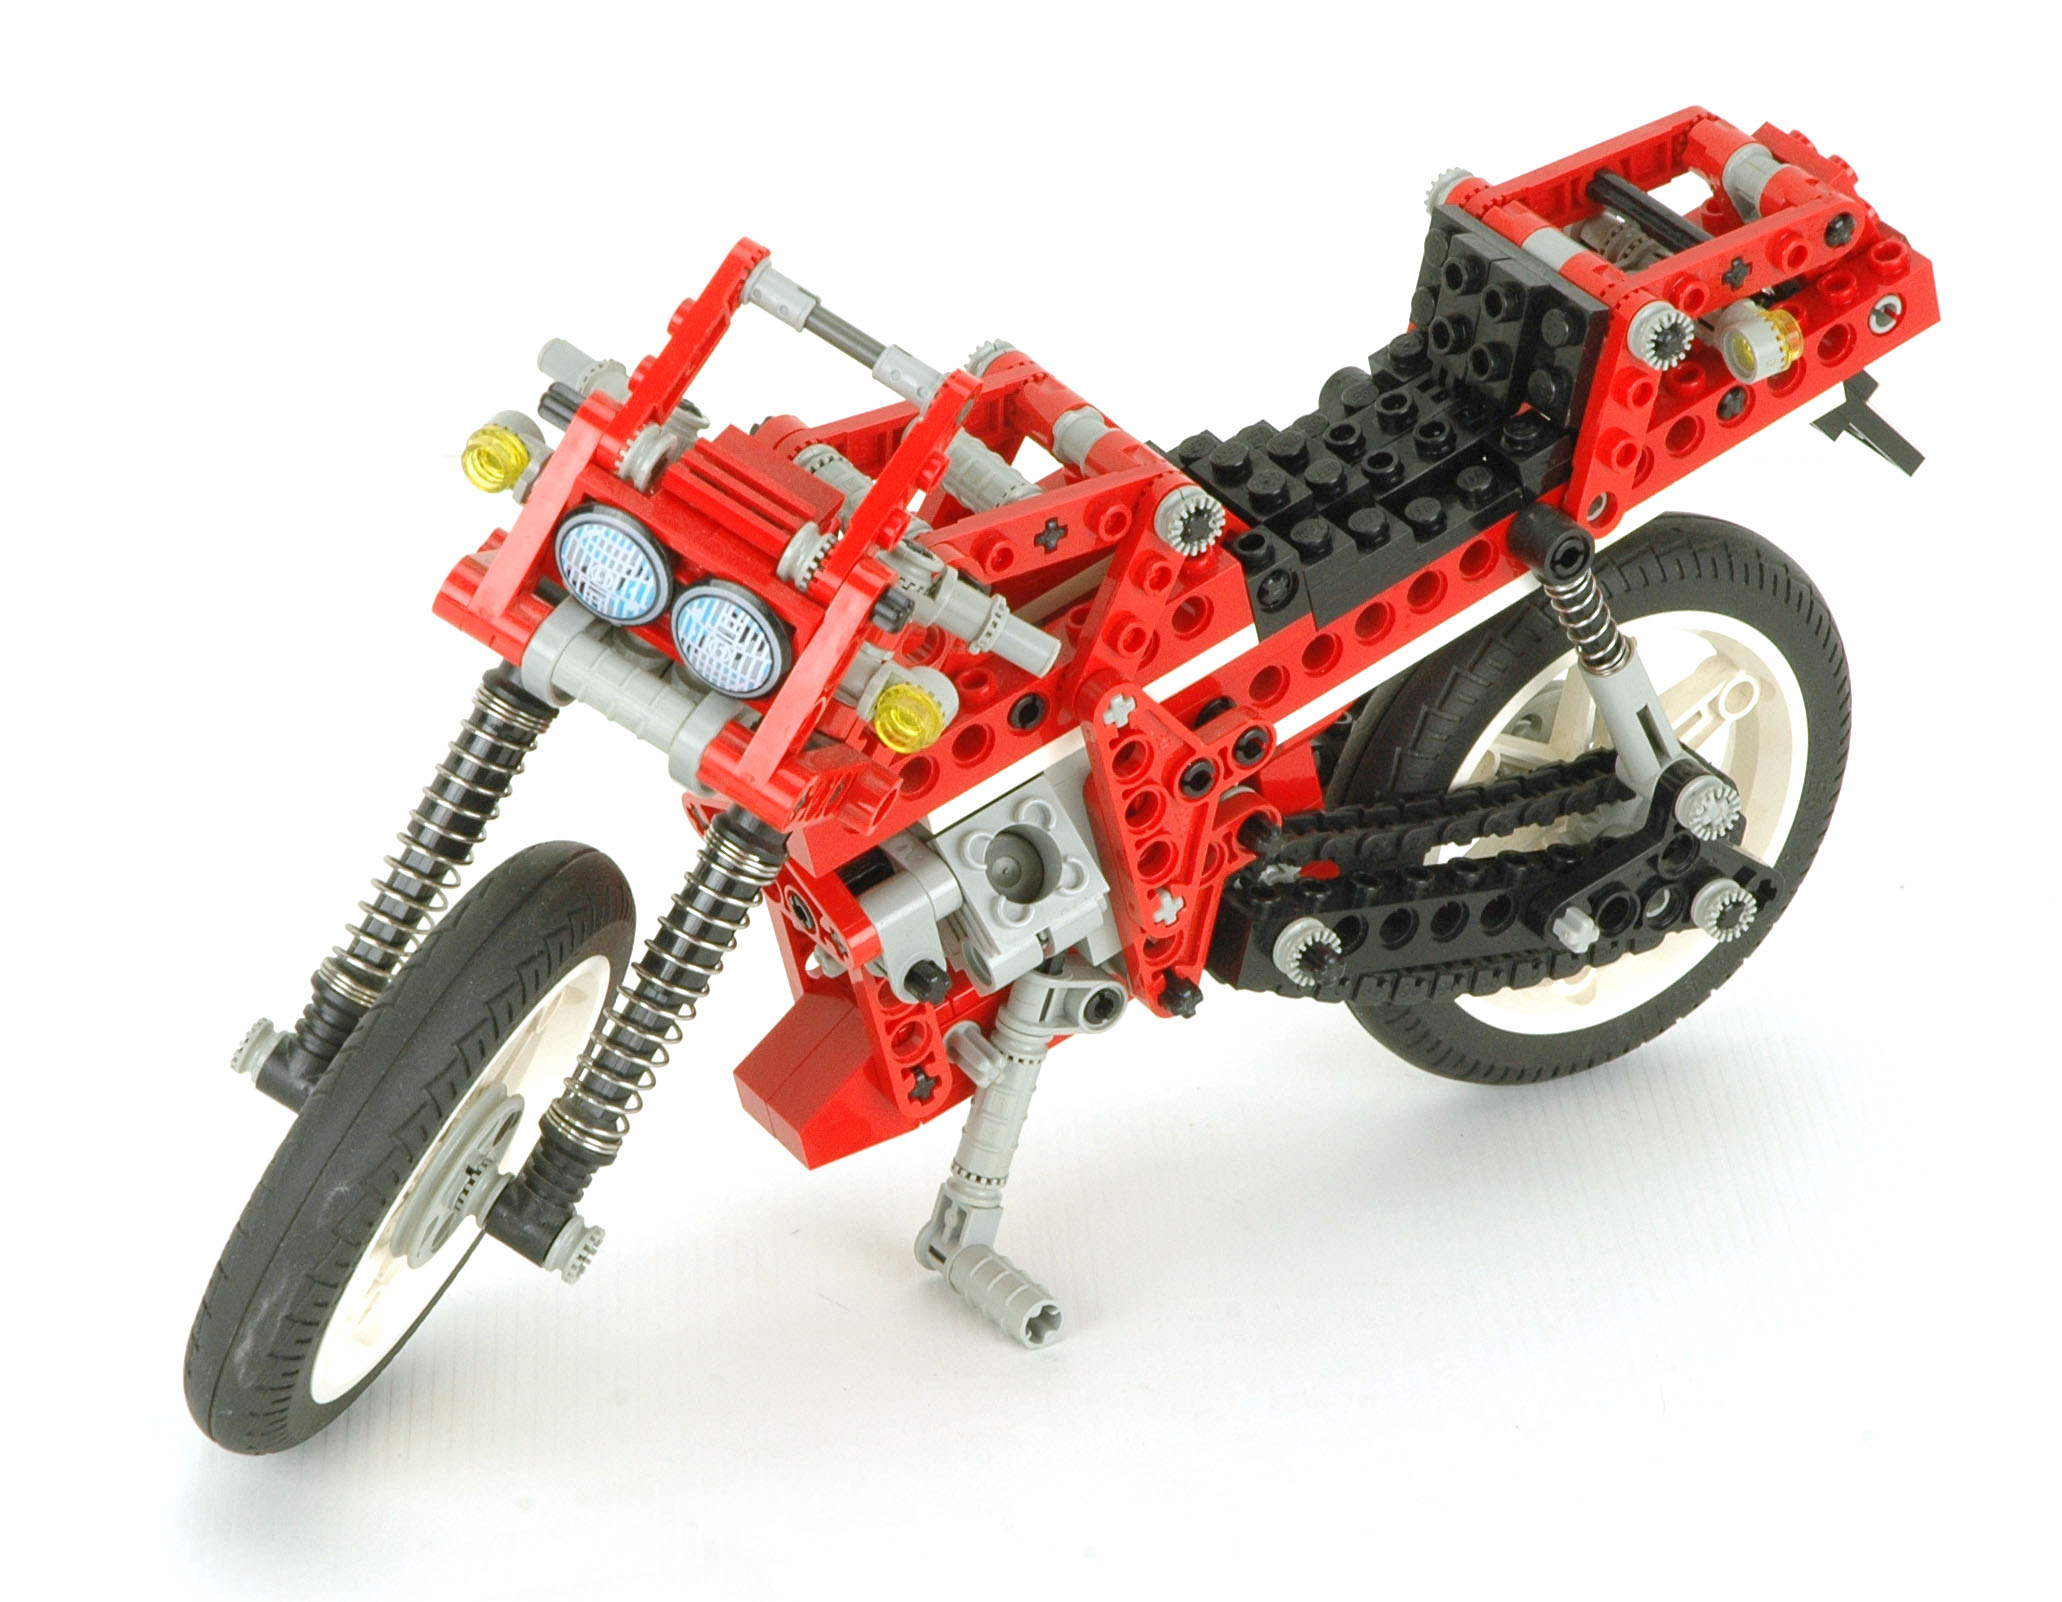 Motorrad Trike schwarz 9293 6327 1197 6462 6479 2584 7033 30187 85 # Lego